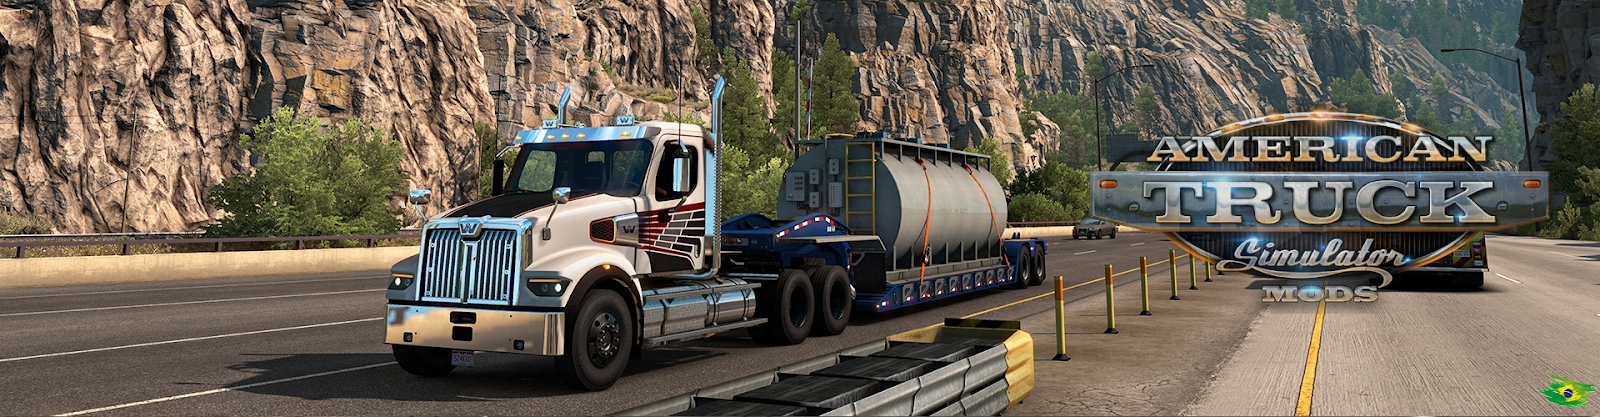 American Truck Simulator Mods - Mods ATS, Mods American Truck Simulator e Muito Mais